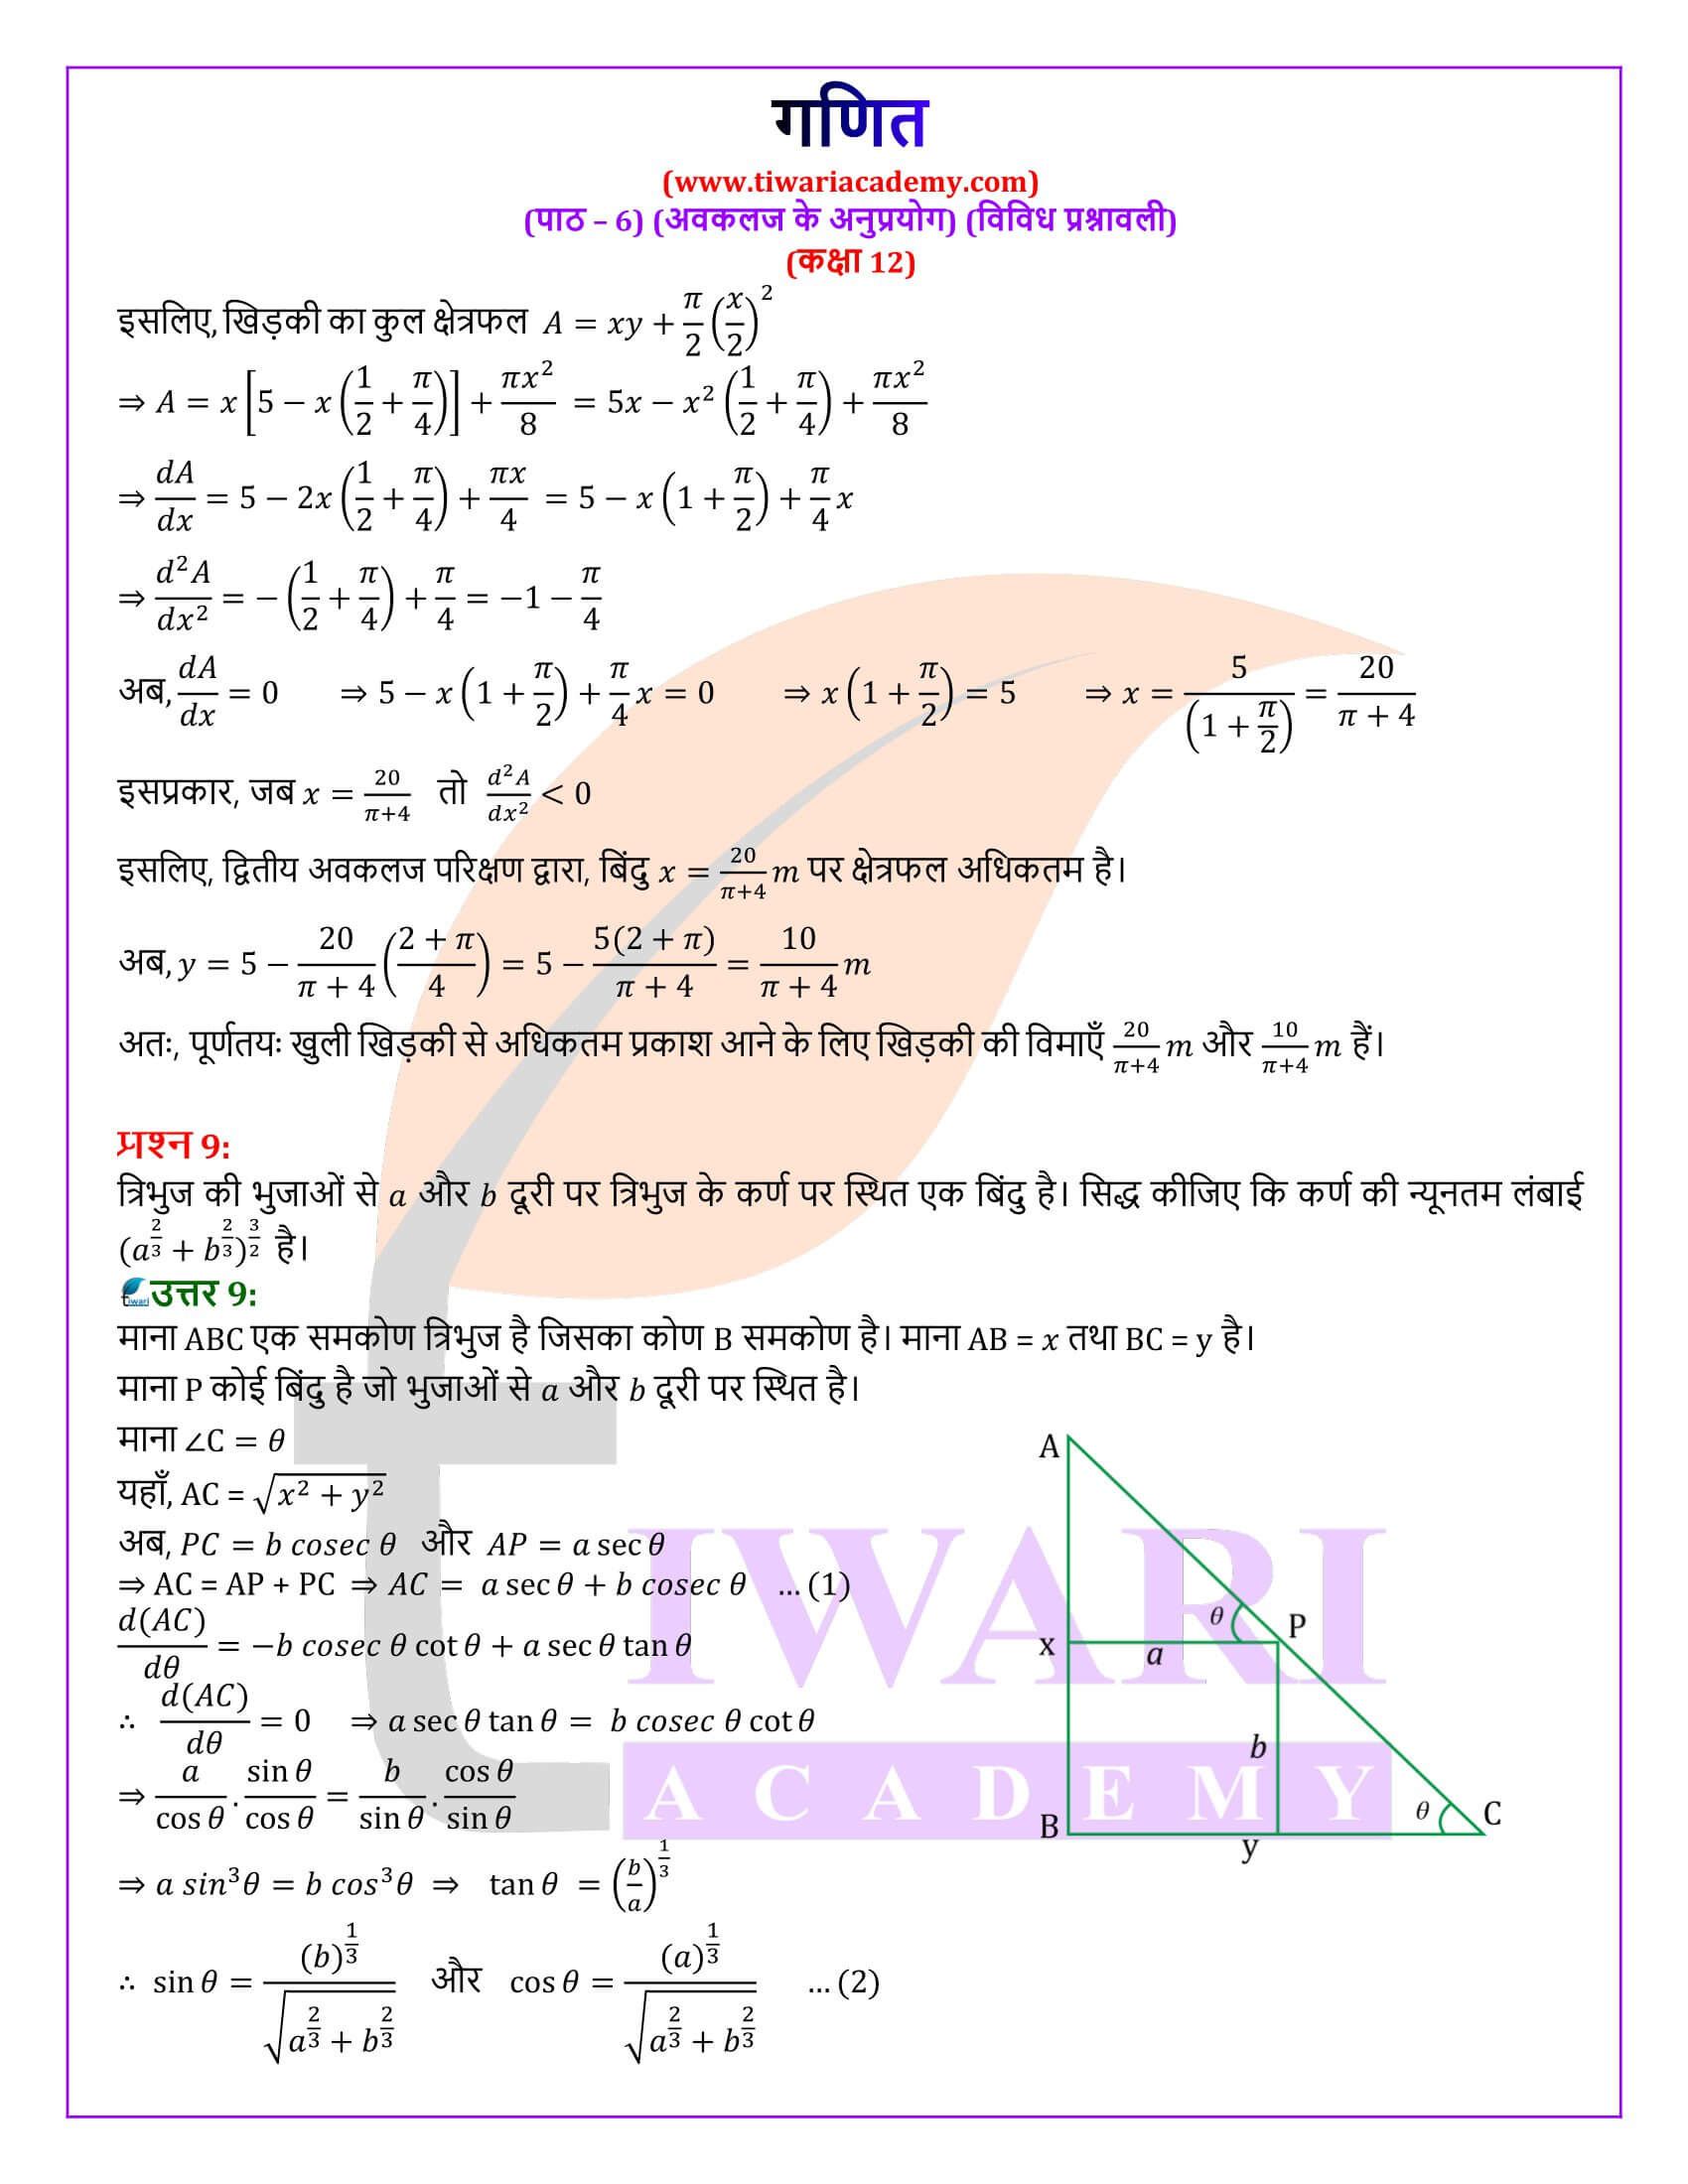 कक्षा 12 गणित अध्याय 6 विविध प्रश्नावली सवाल जवाब